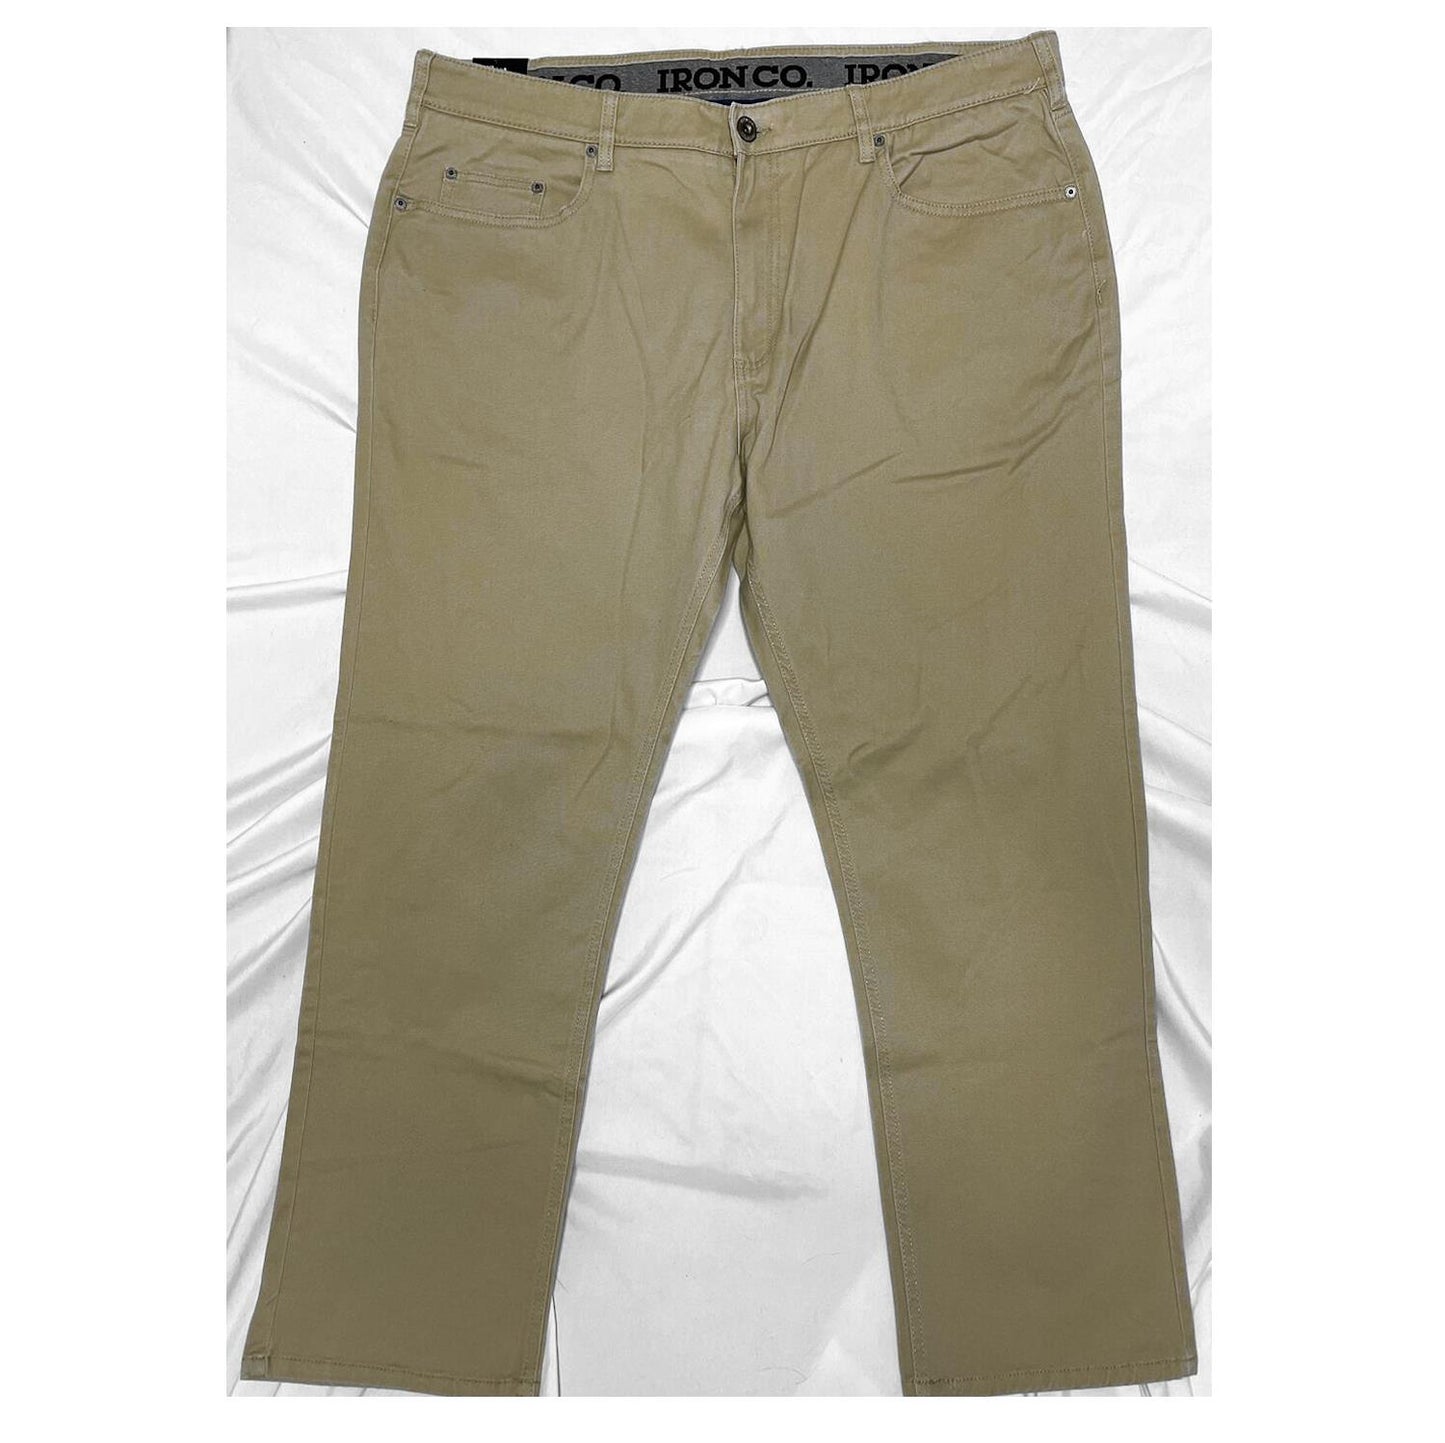 Iron Co Men's Classic Stretch Comfort 5-Pocket Patriot Pants